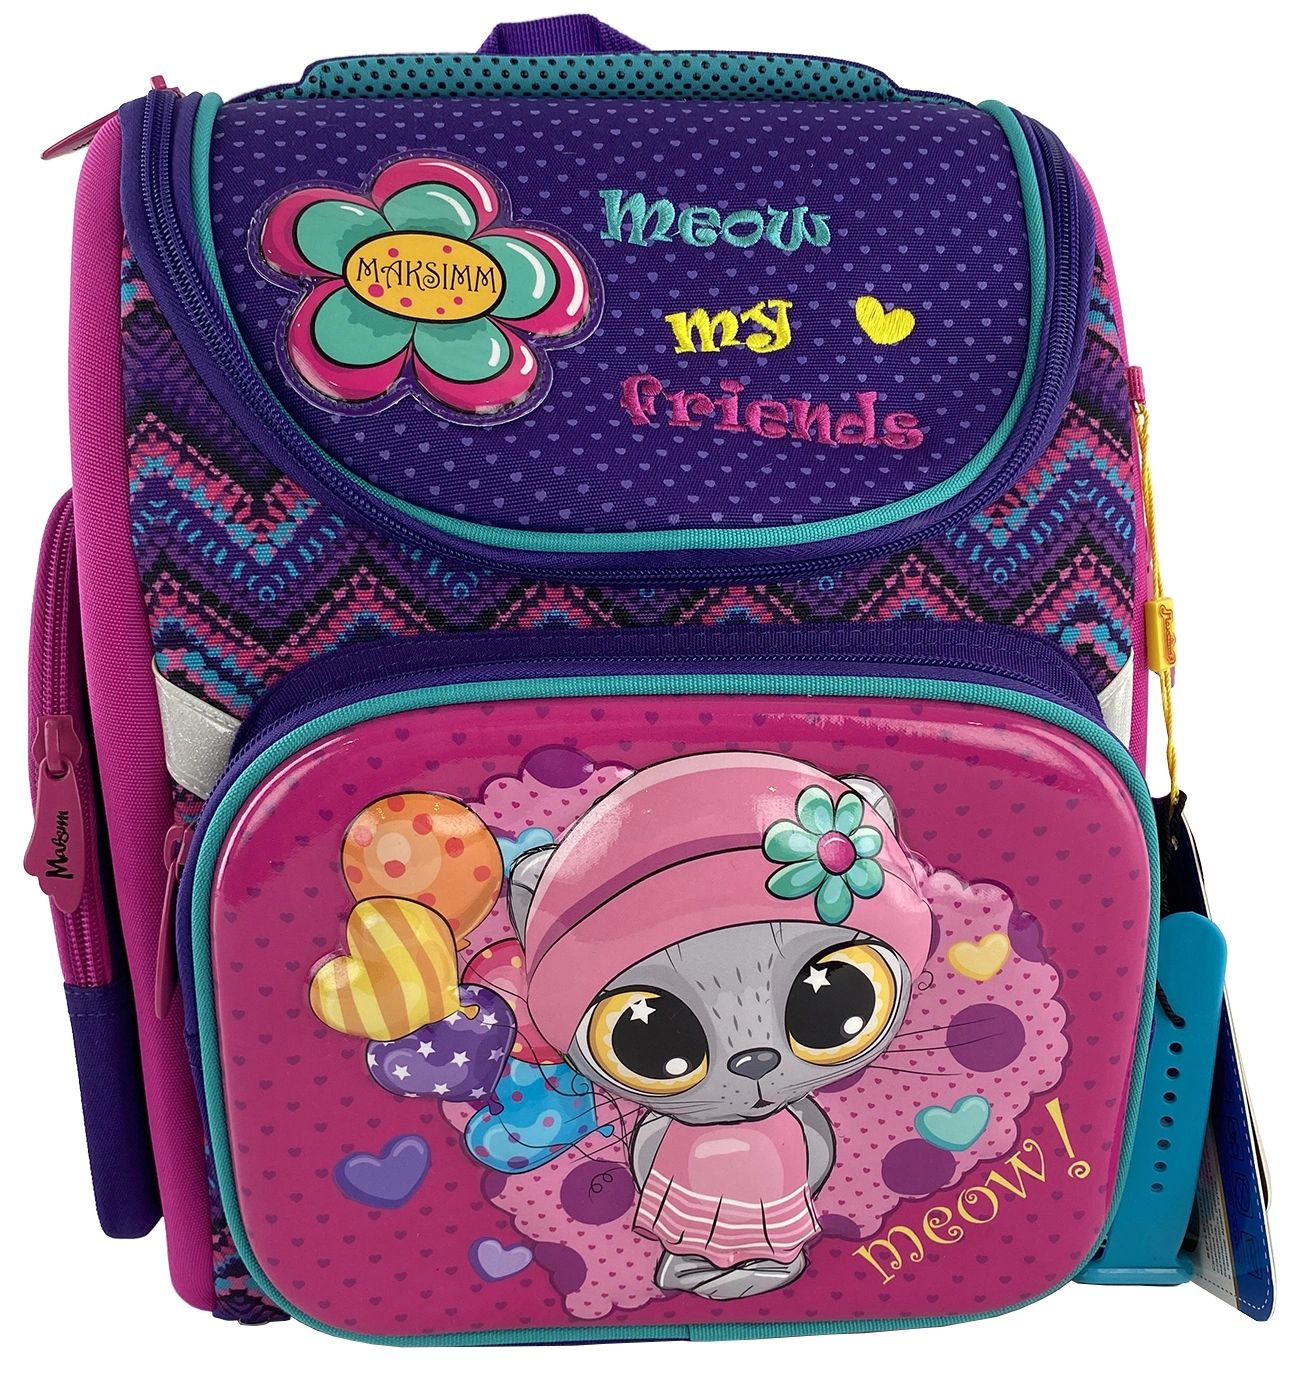 Рюкзак фиолетовый Maksimm А811 16652-32